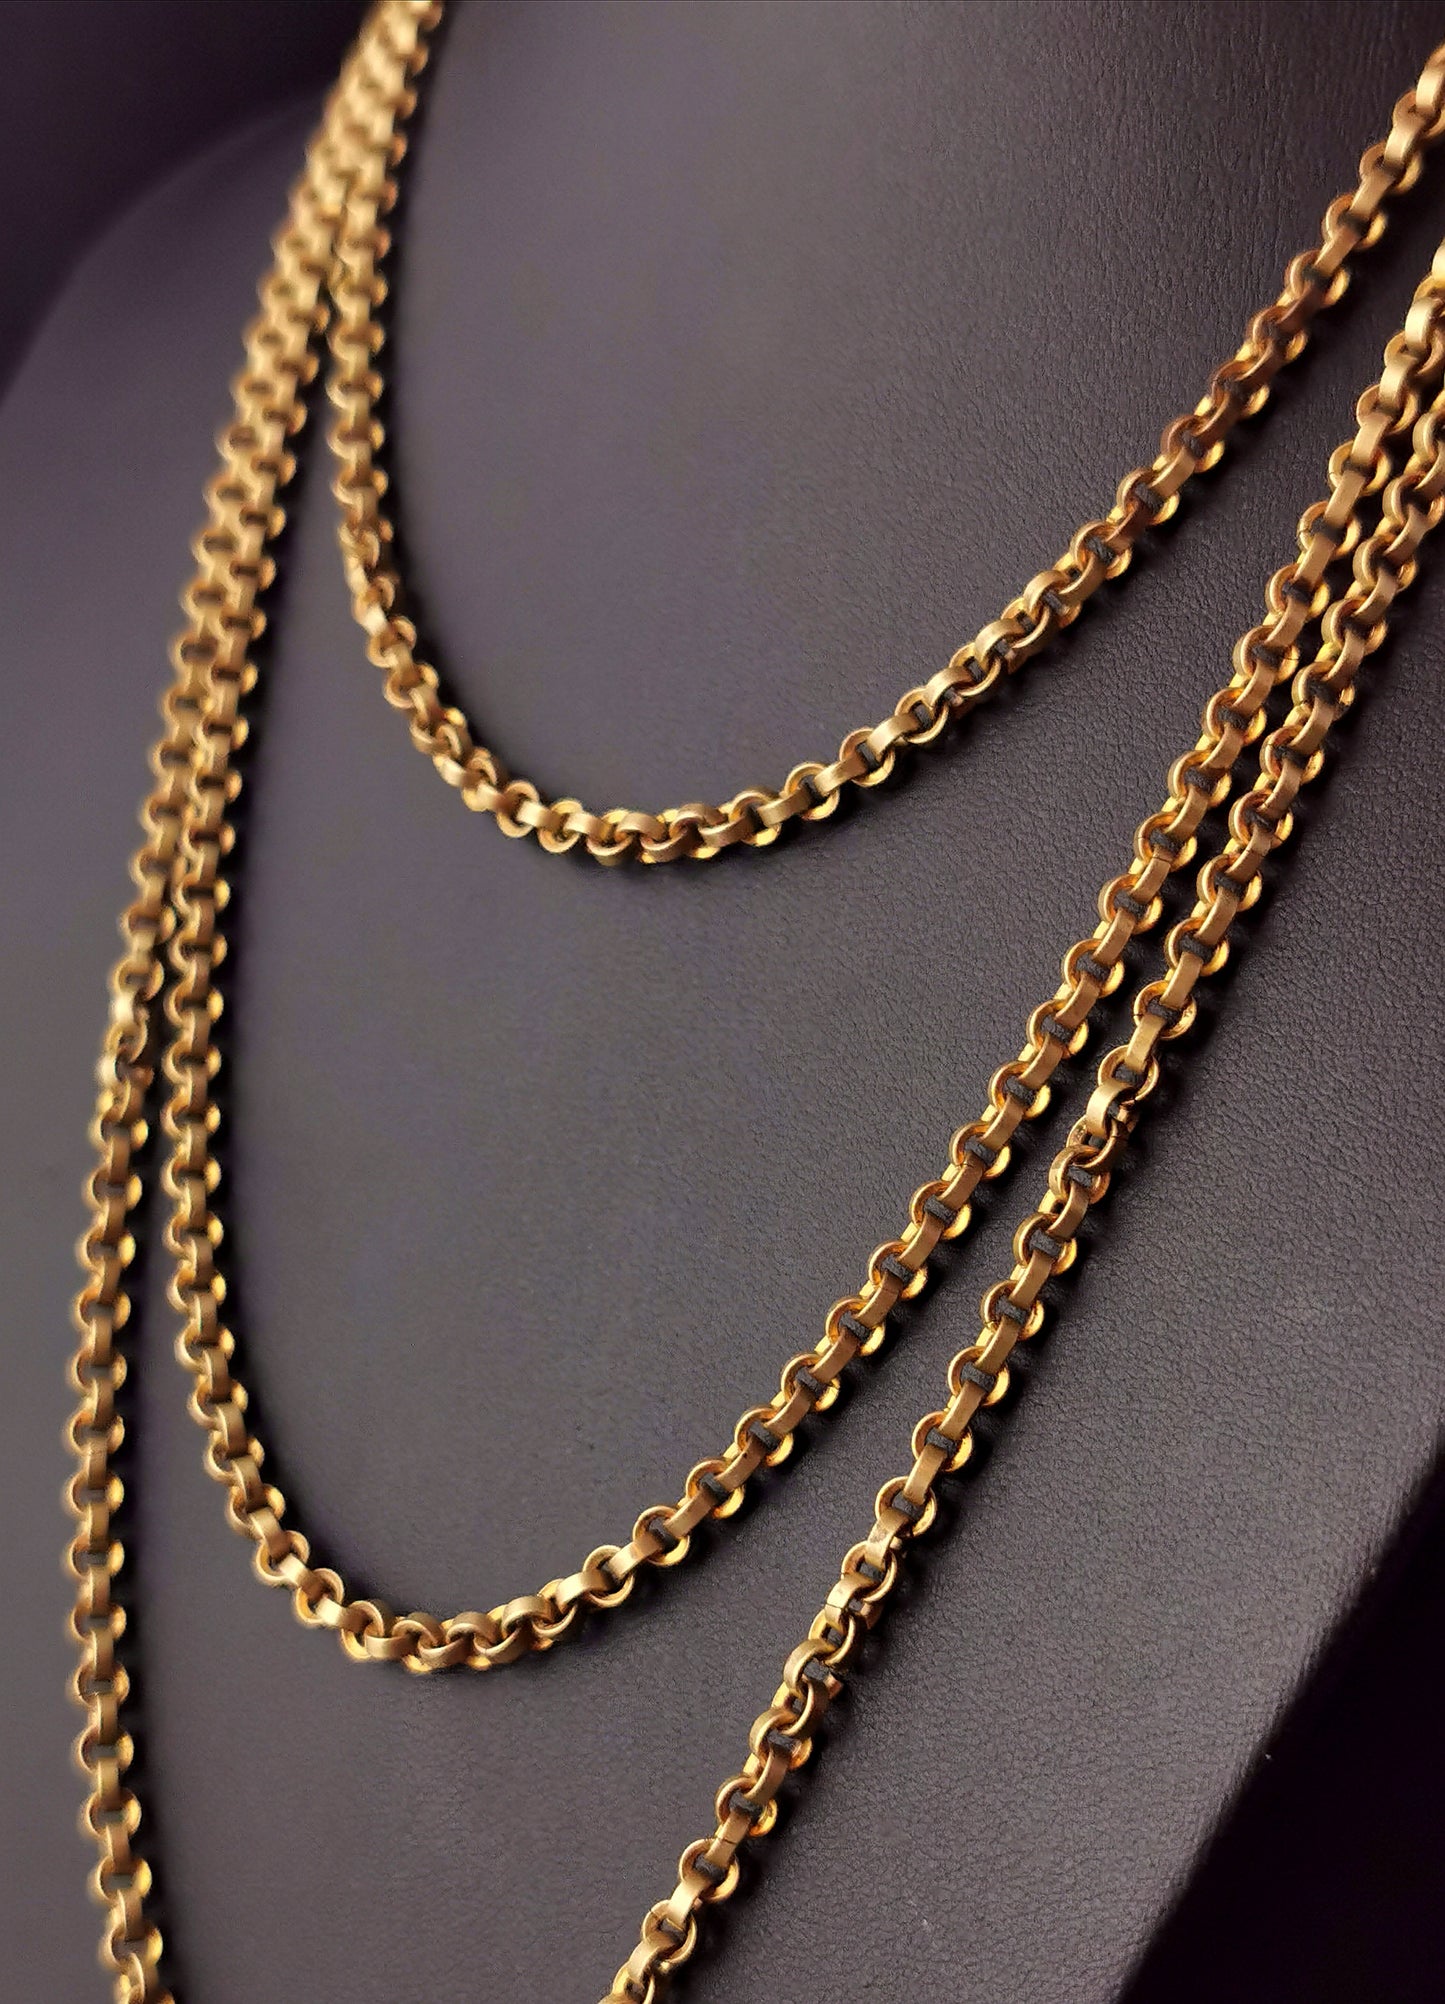 Antique Georgian longuard chain, muff chain necklace